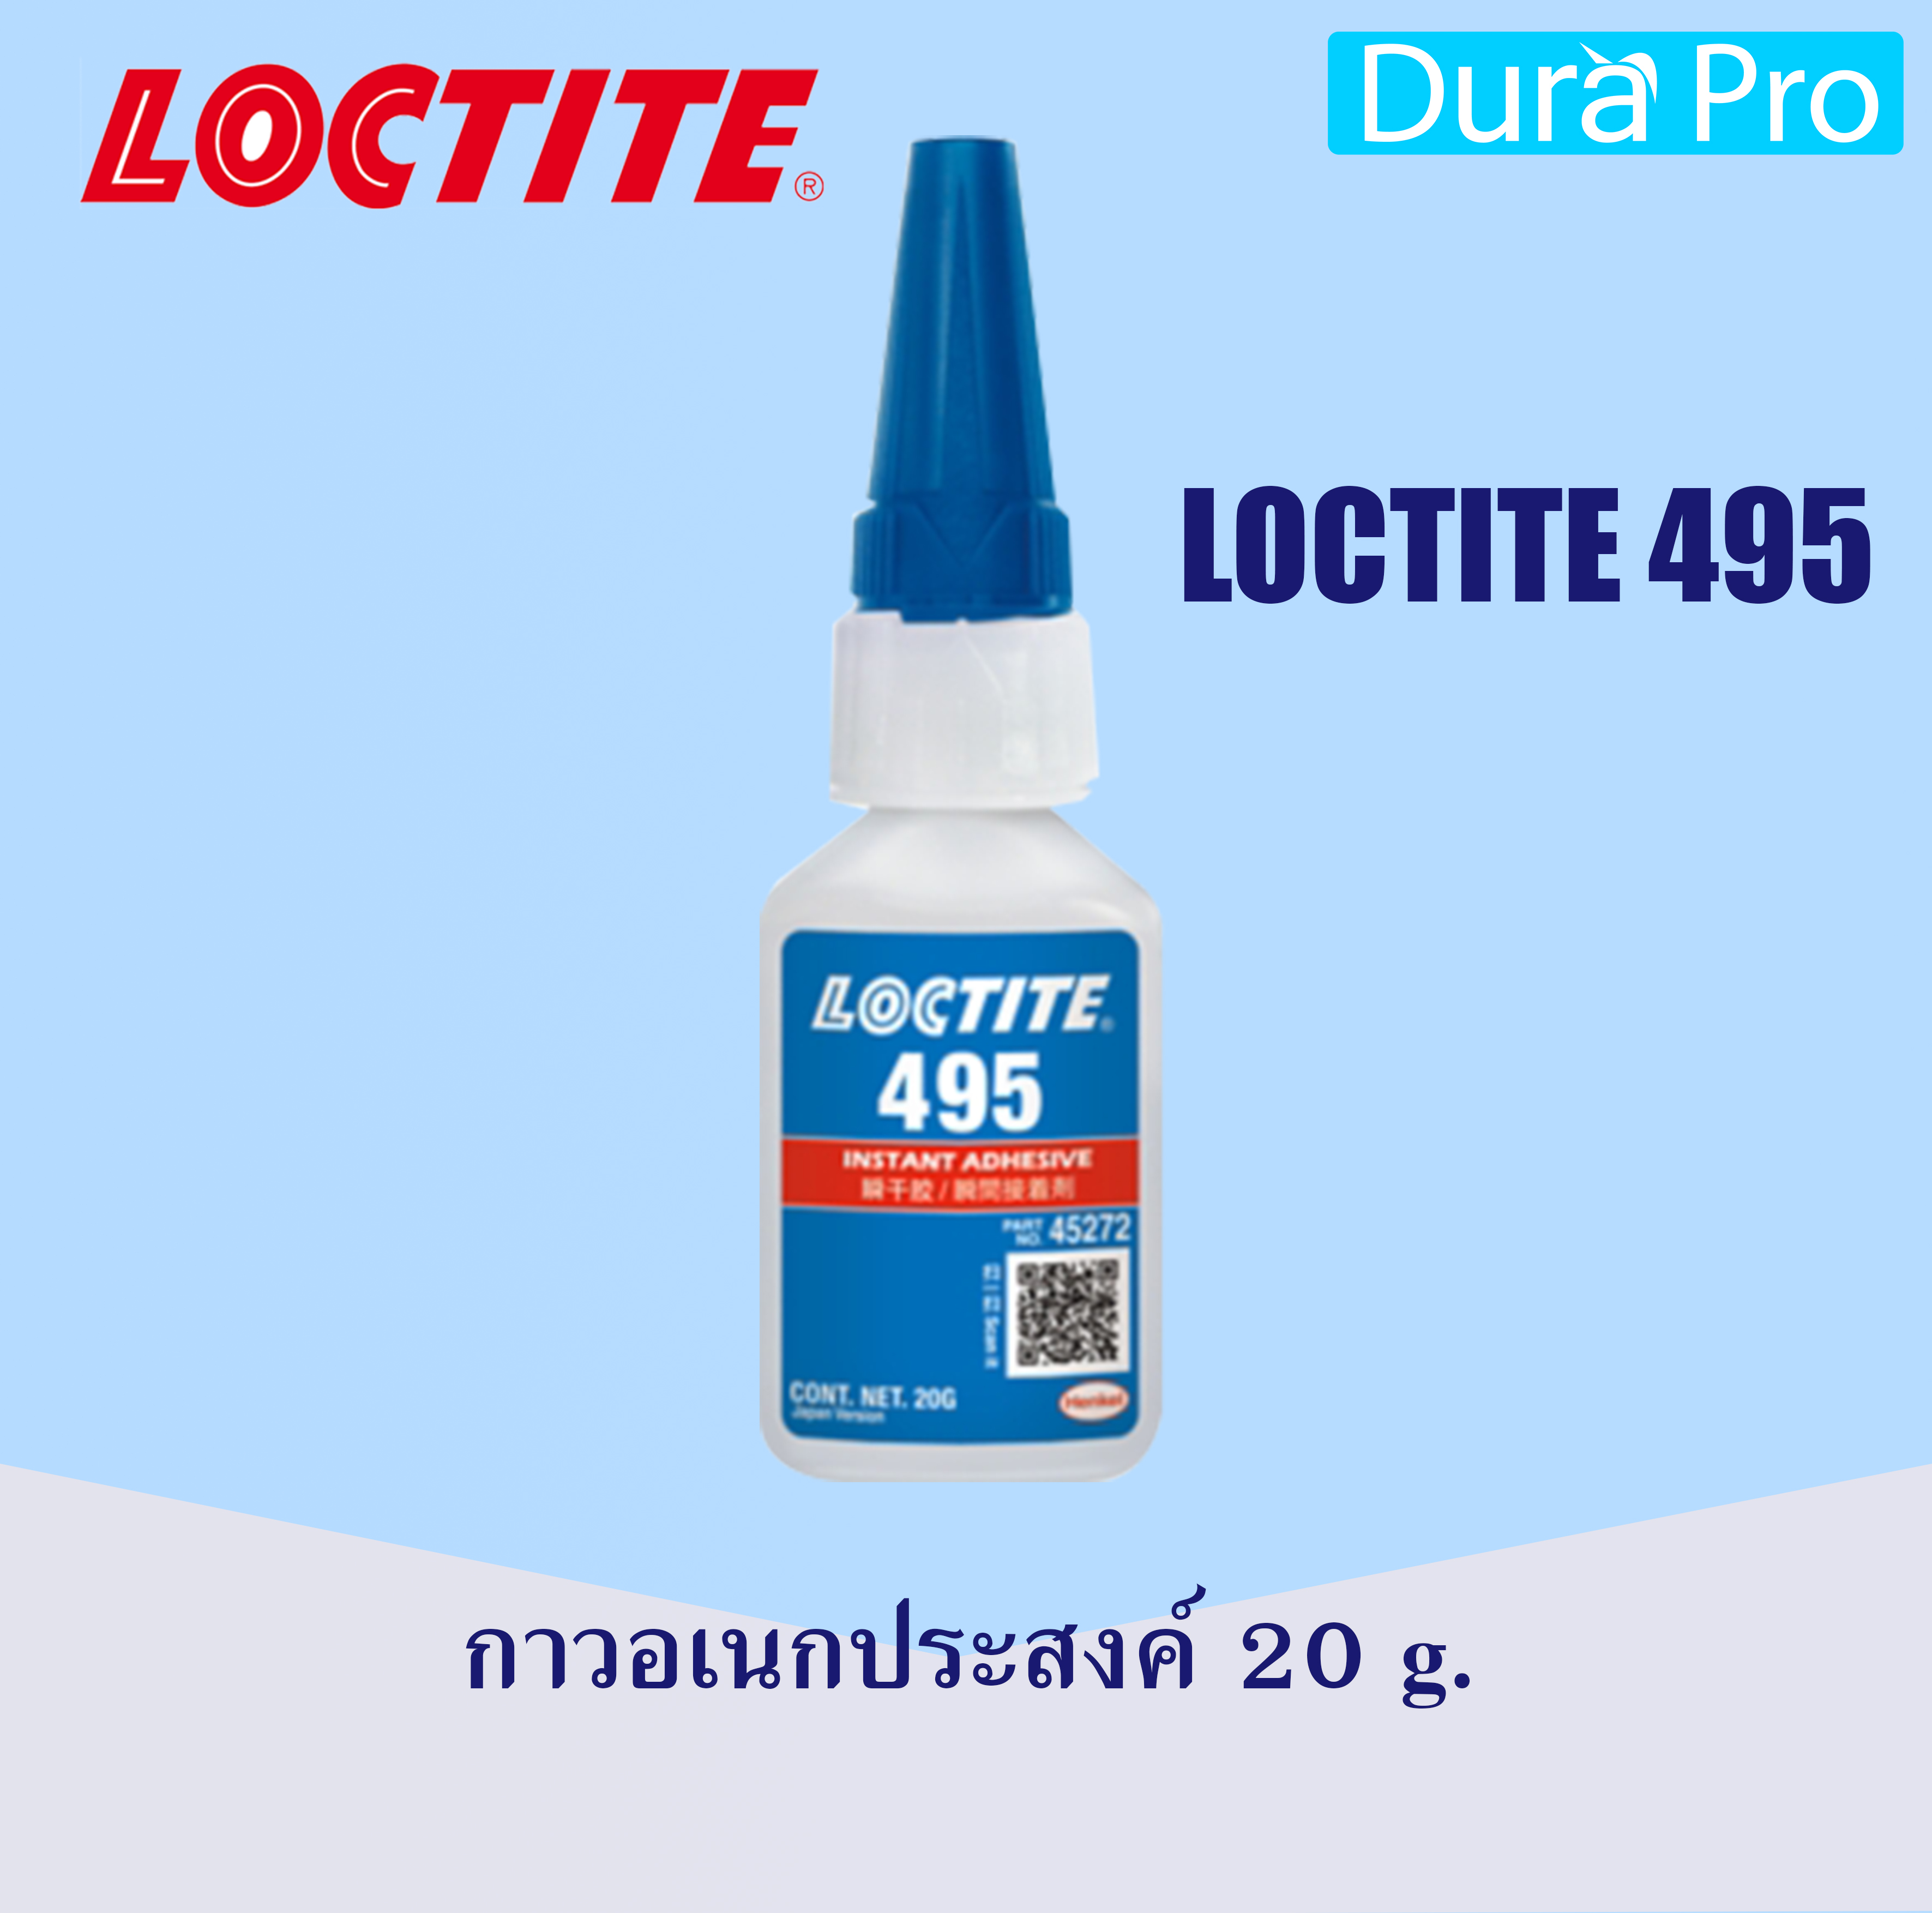 LOCTITE 495 instant adhesive ( ล็อคไทท์ ) กาวอเนกประสงค์ 20 g. จัดจำหน่ายโดย Dura Pro